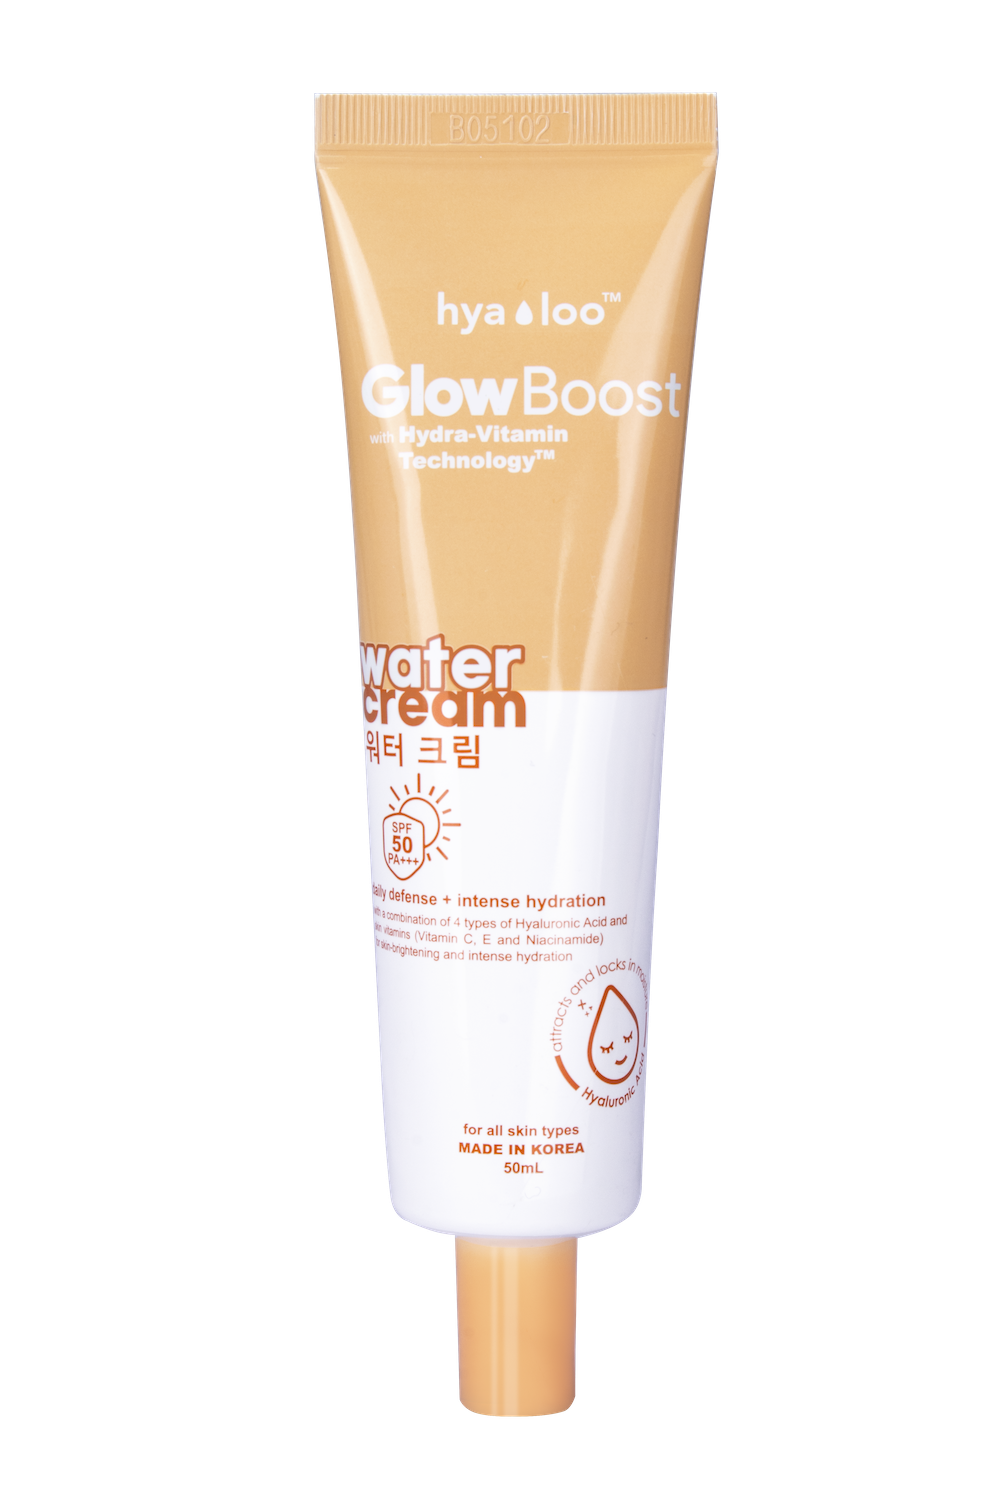 HyalooGlow Boost Water Cream